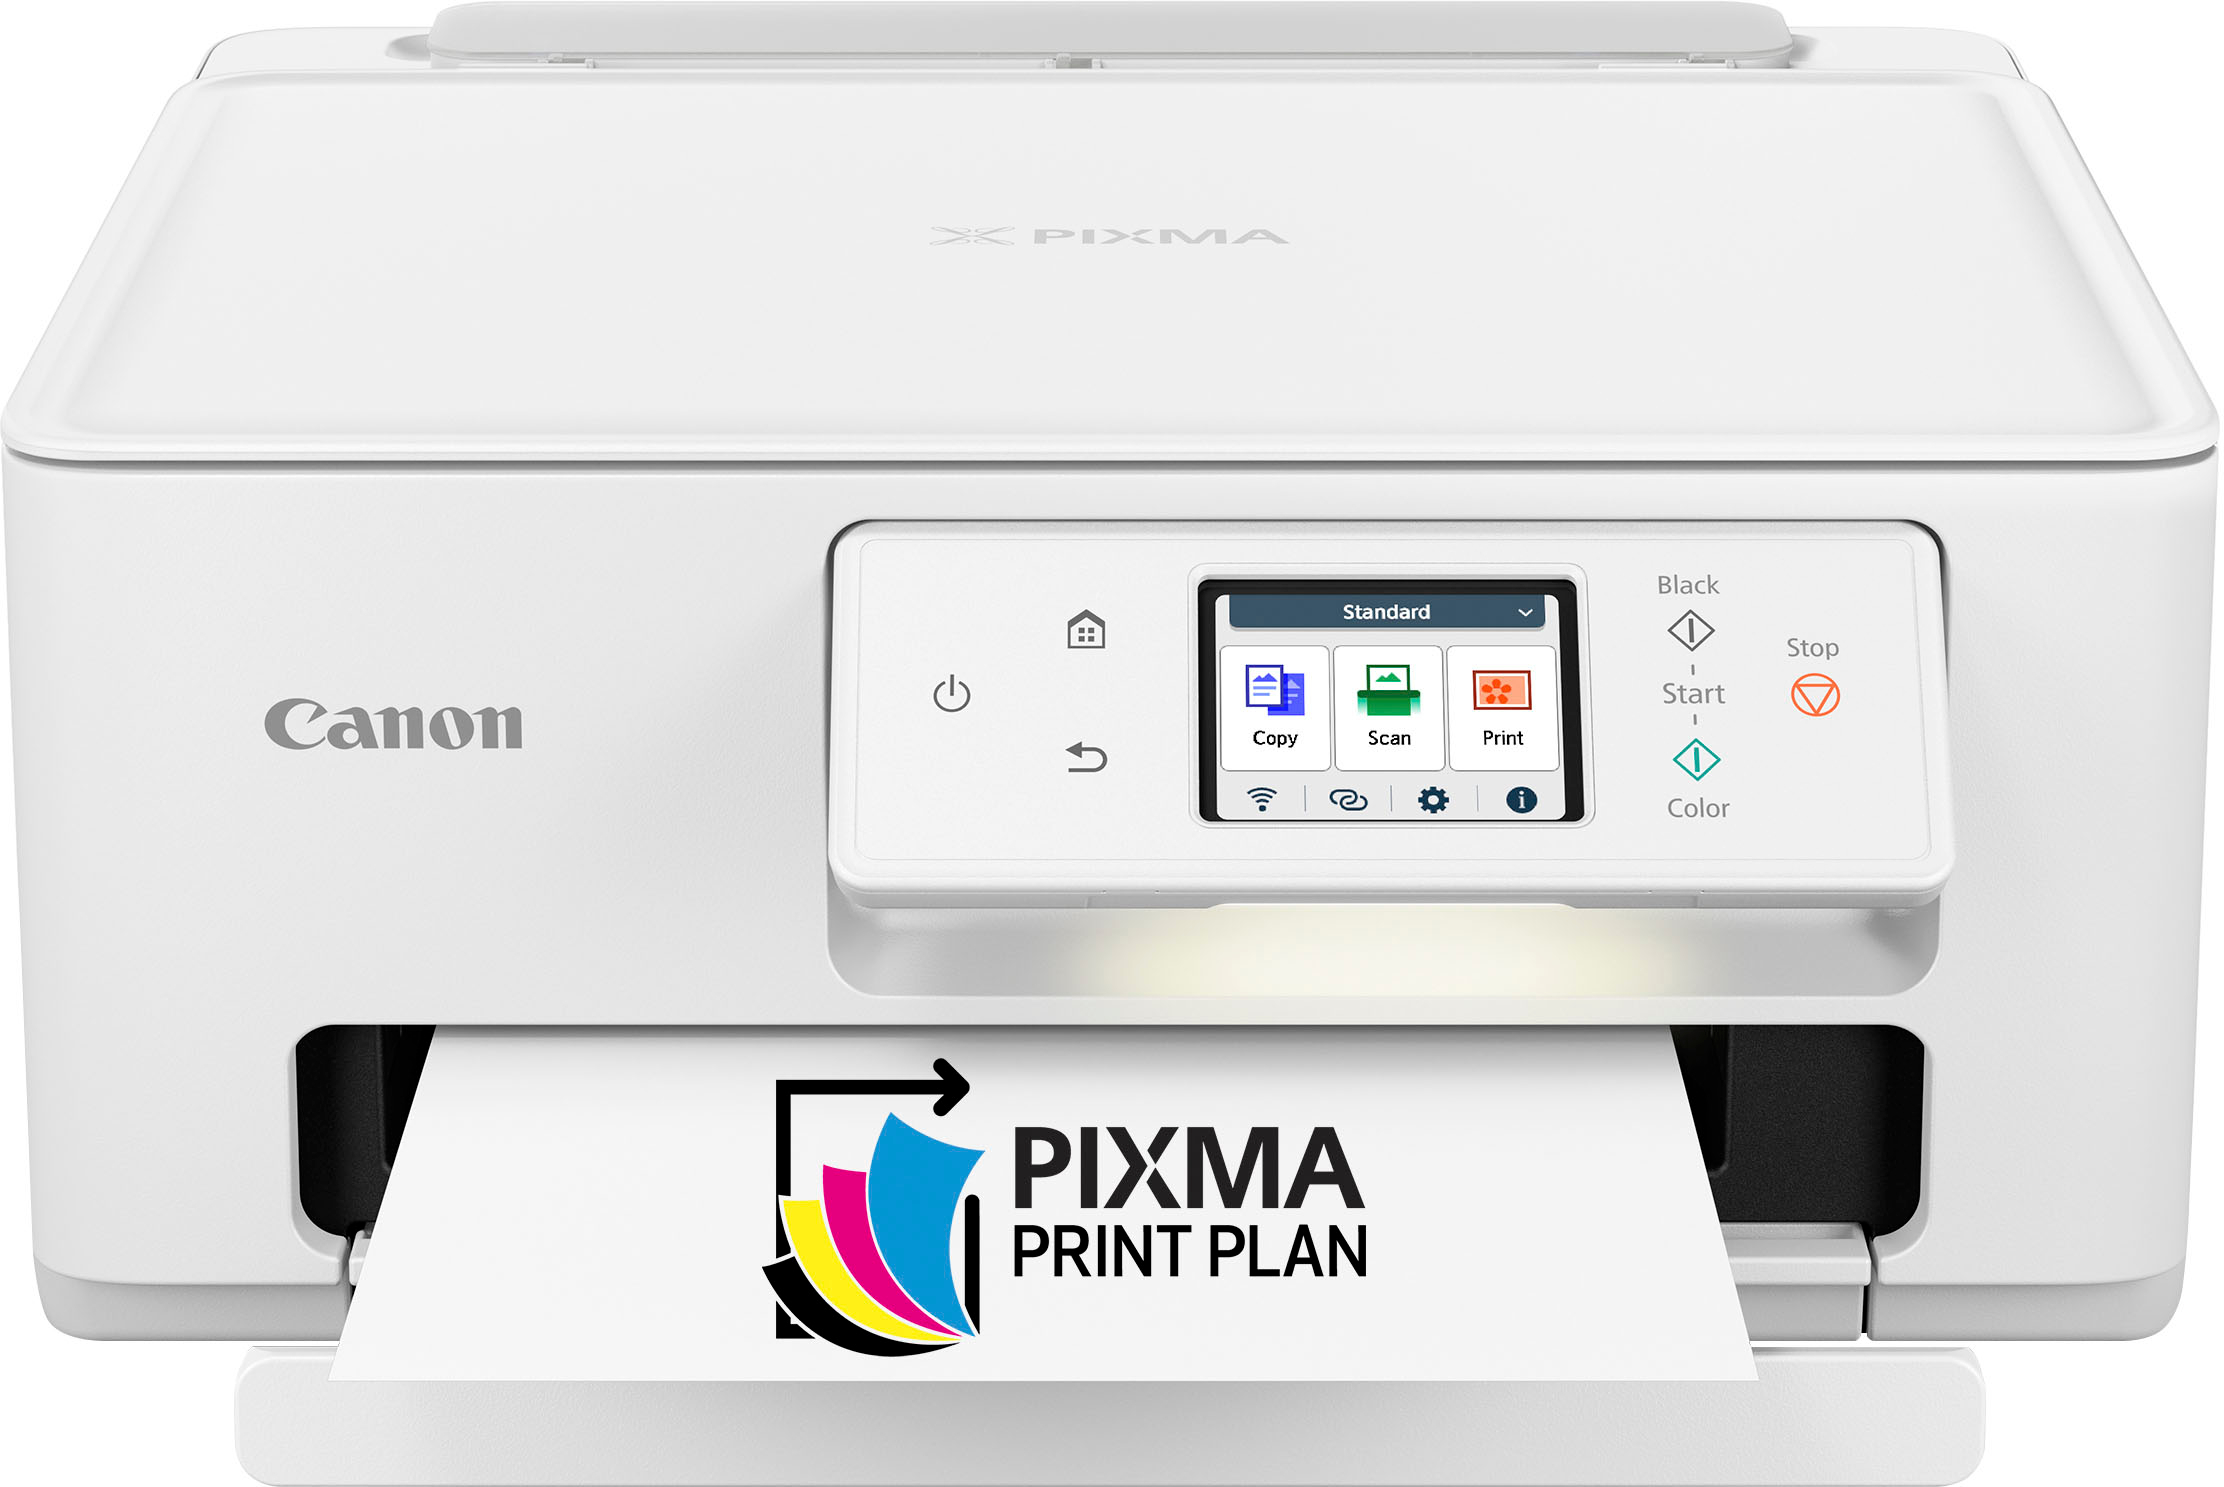 100-550ml ink Cartridge Refill Kit for Canon Pixma TS3440 TS3450 TS3451  Printers